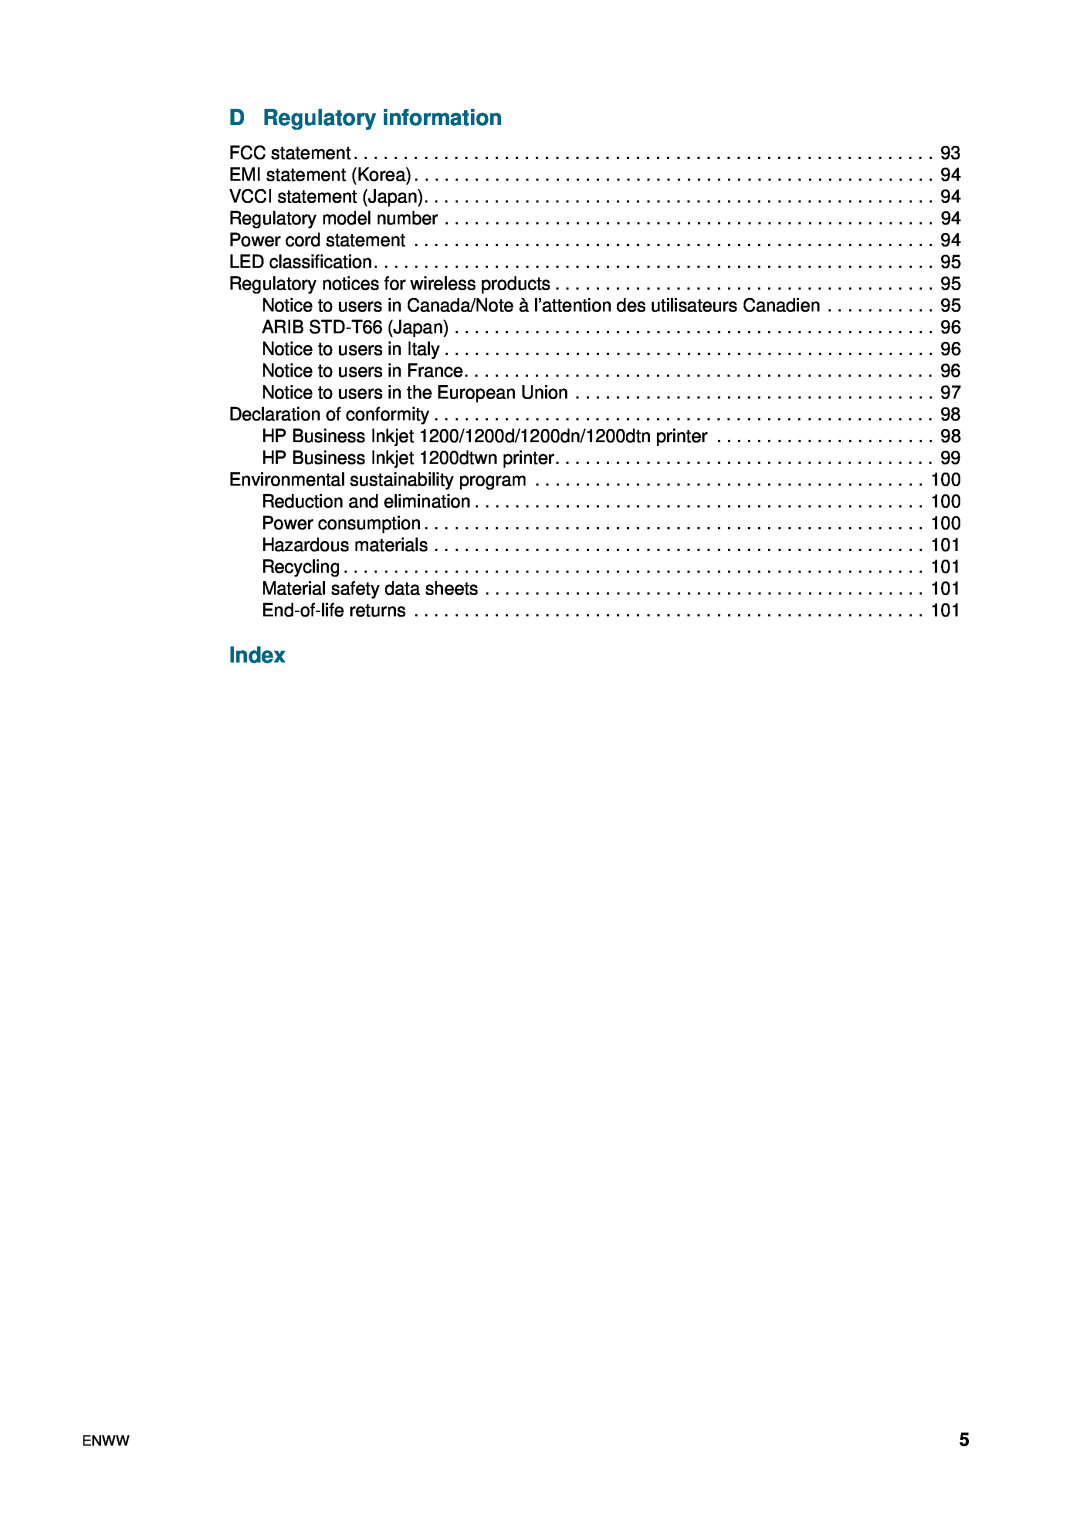 HP 1200 manual D Regulatory information, Index 